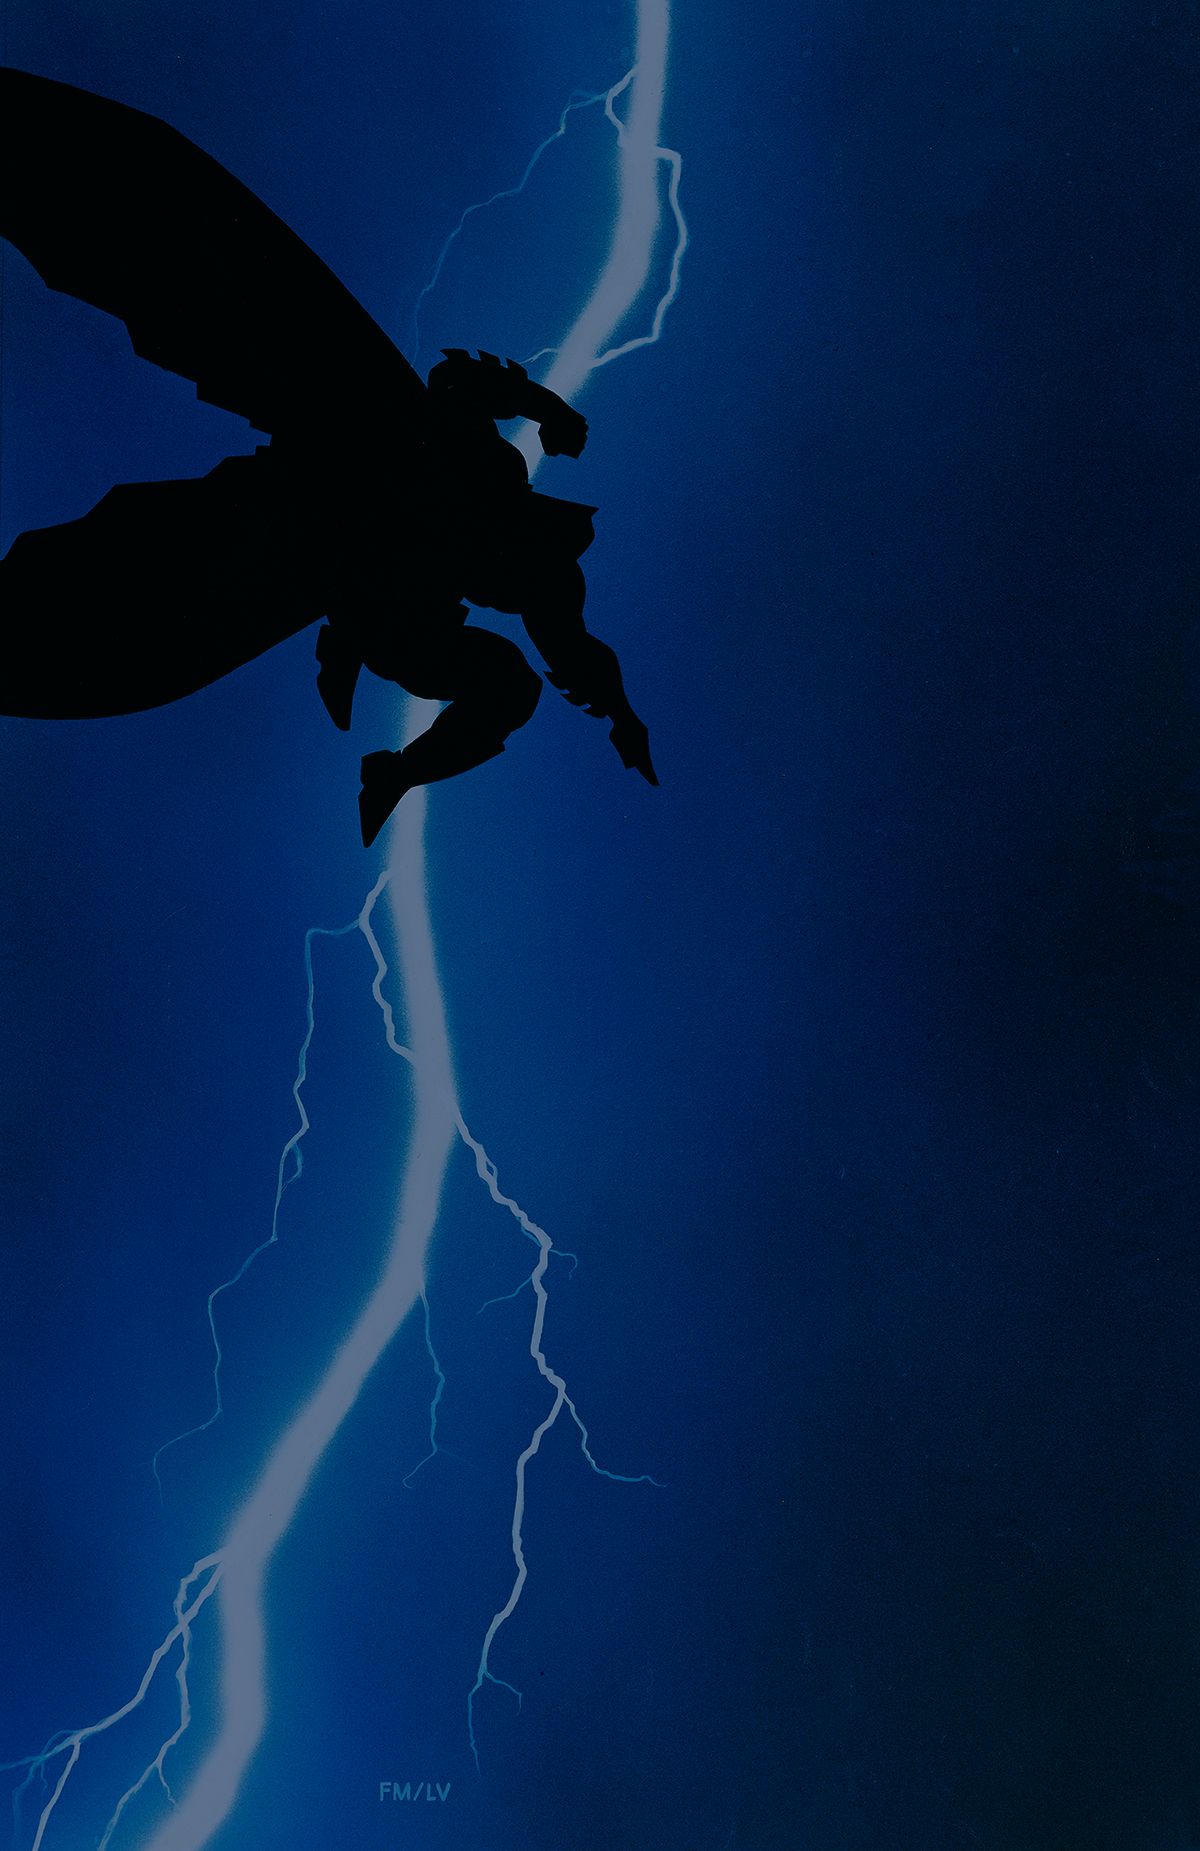 1080p Image: Batman The Dark Knight Returns Wallpaper